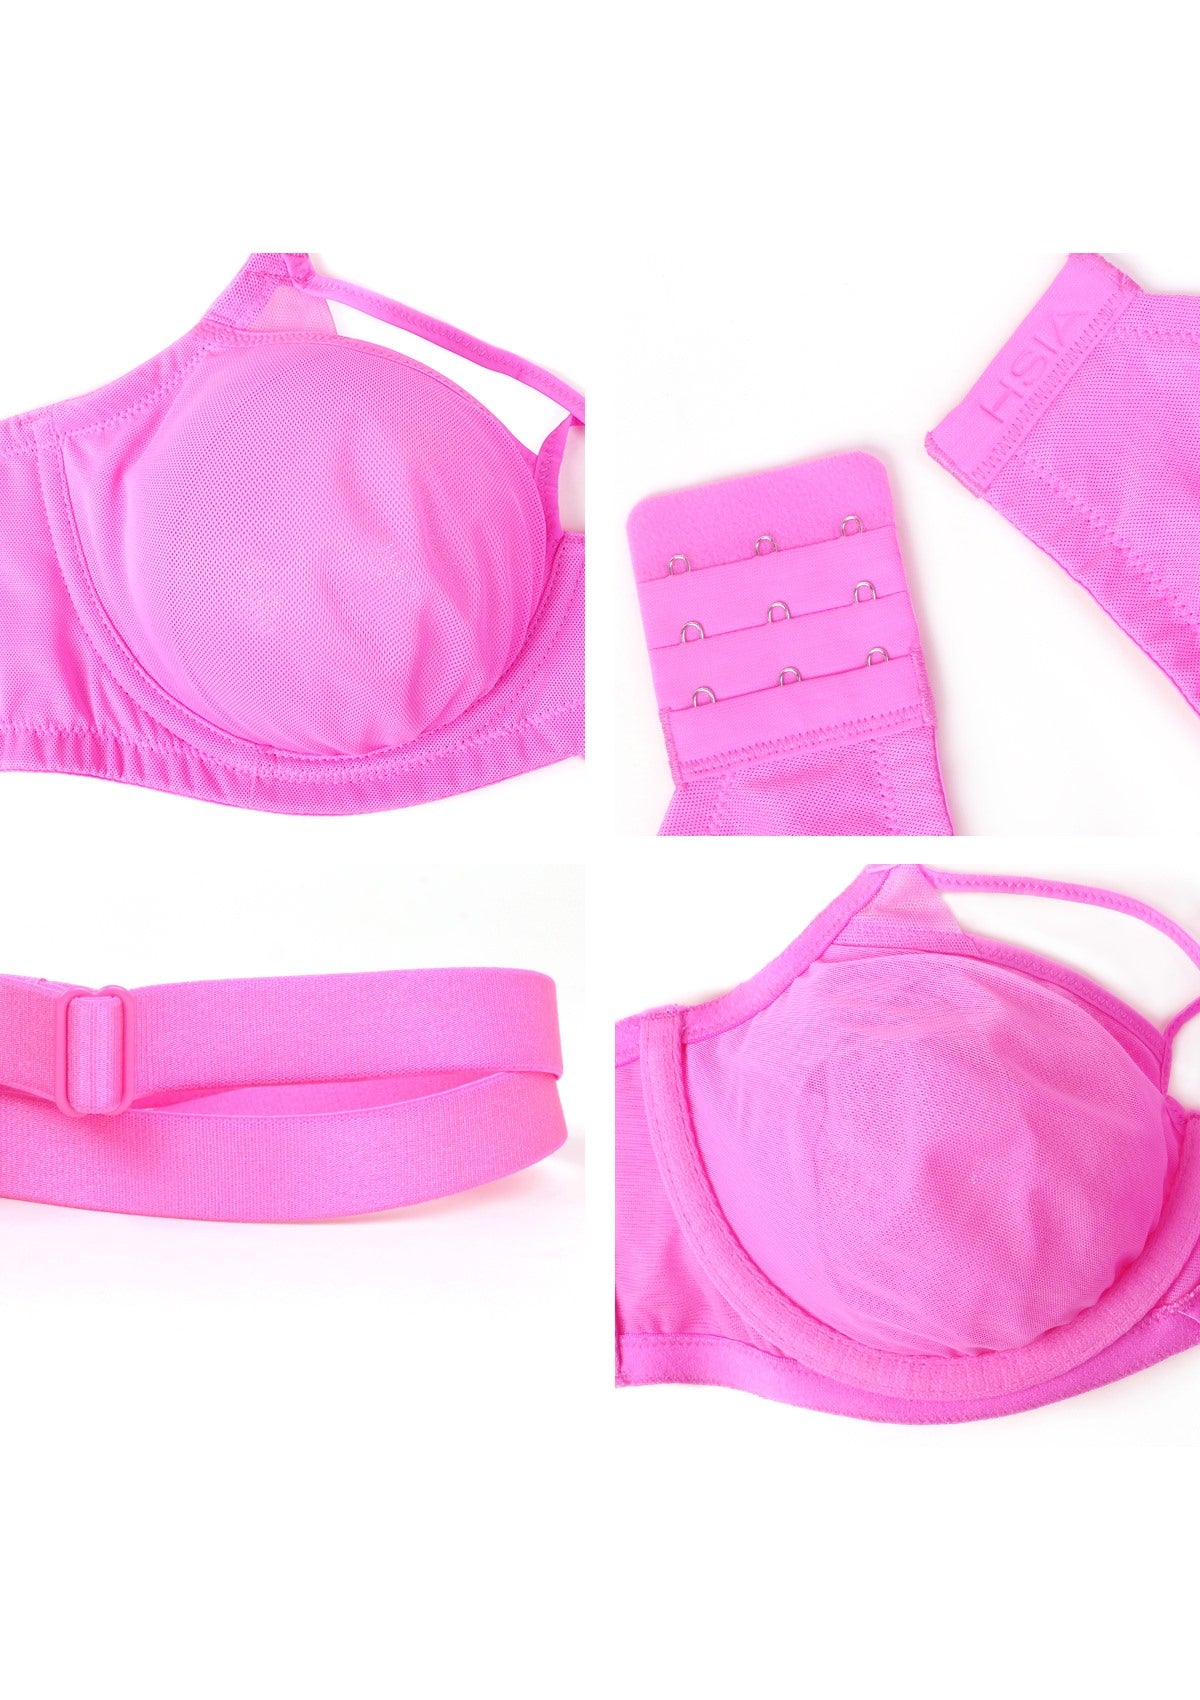 HSIA Billie Cross Front Strap Smooth Sheer Mesh Comfy Underwire Bra - Barbie Pink / 38 / C